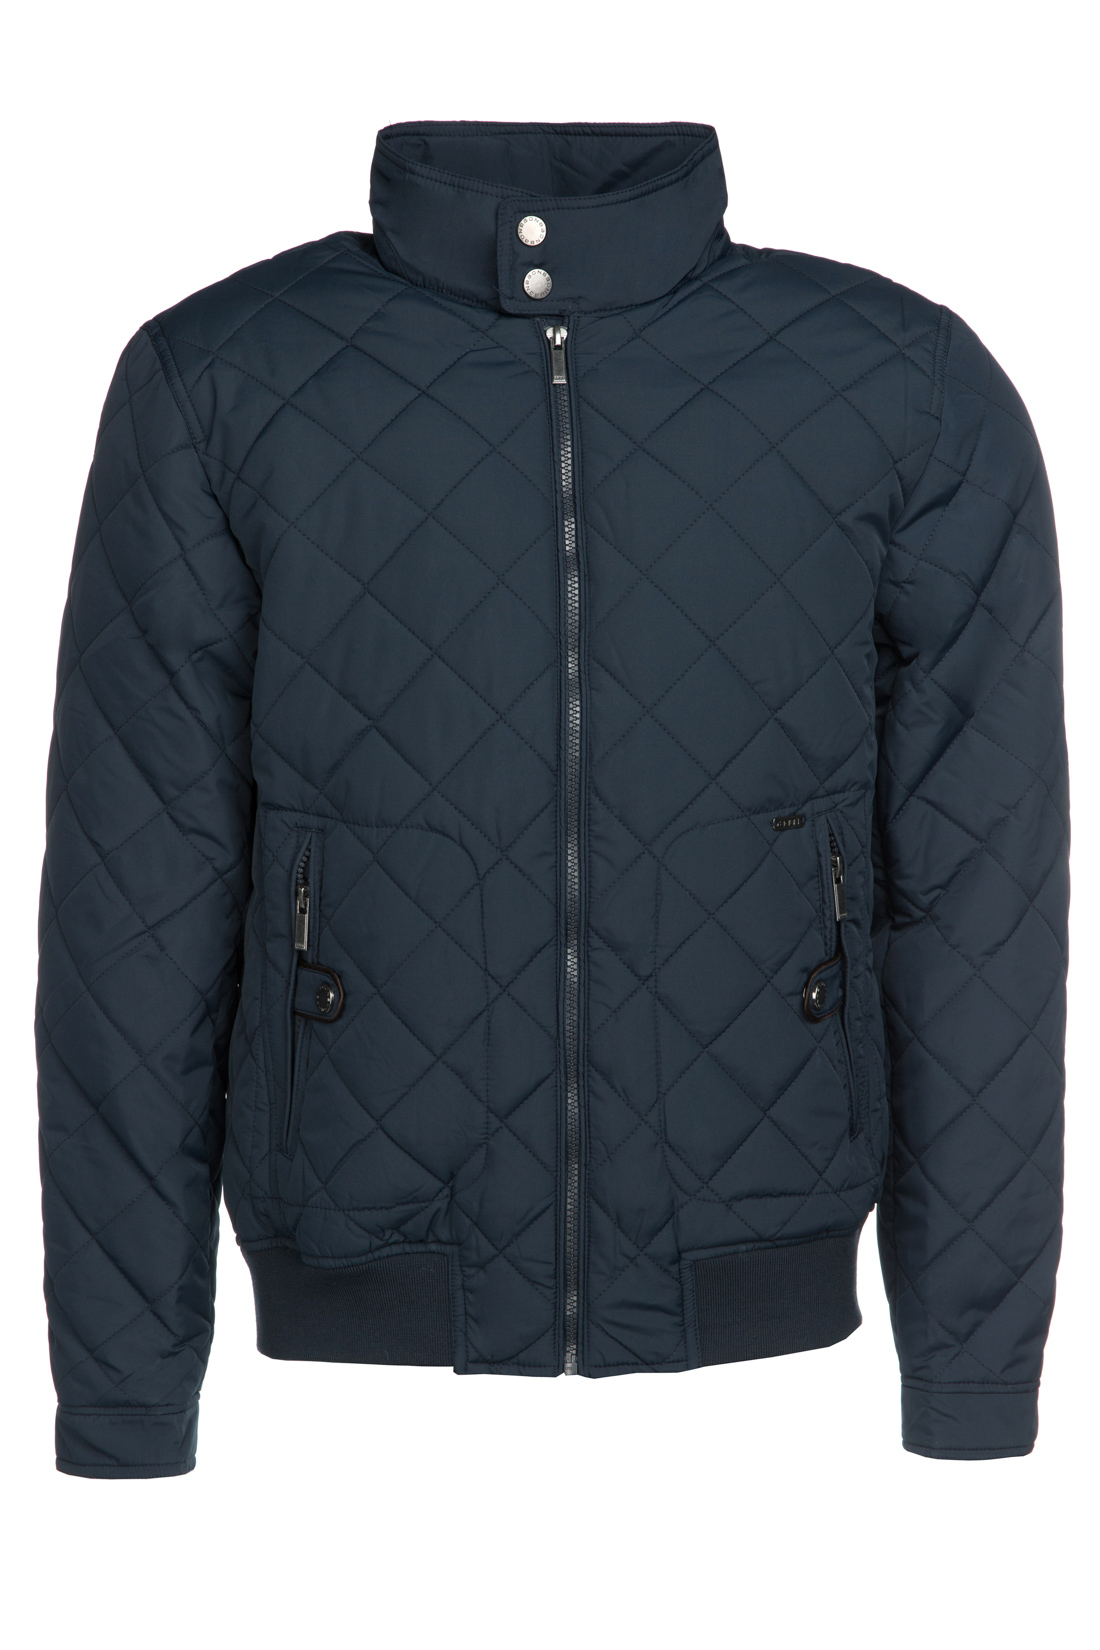 Стёганая куртка с резинкой-рибана (арт. baon B537018), размер XL, цвет синий Стёганая куртка с резинкой-рибана (арт. baon B537018) - фото 4